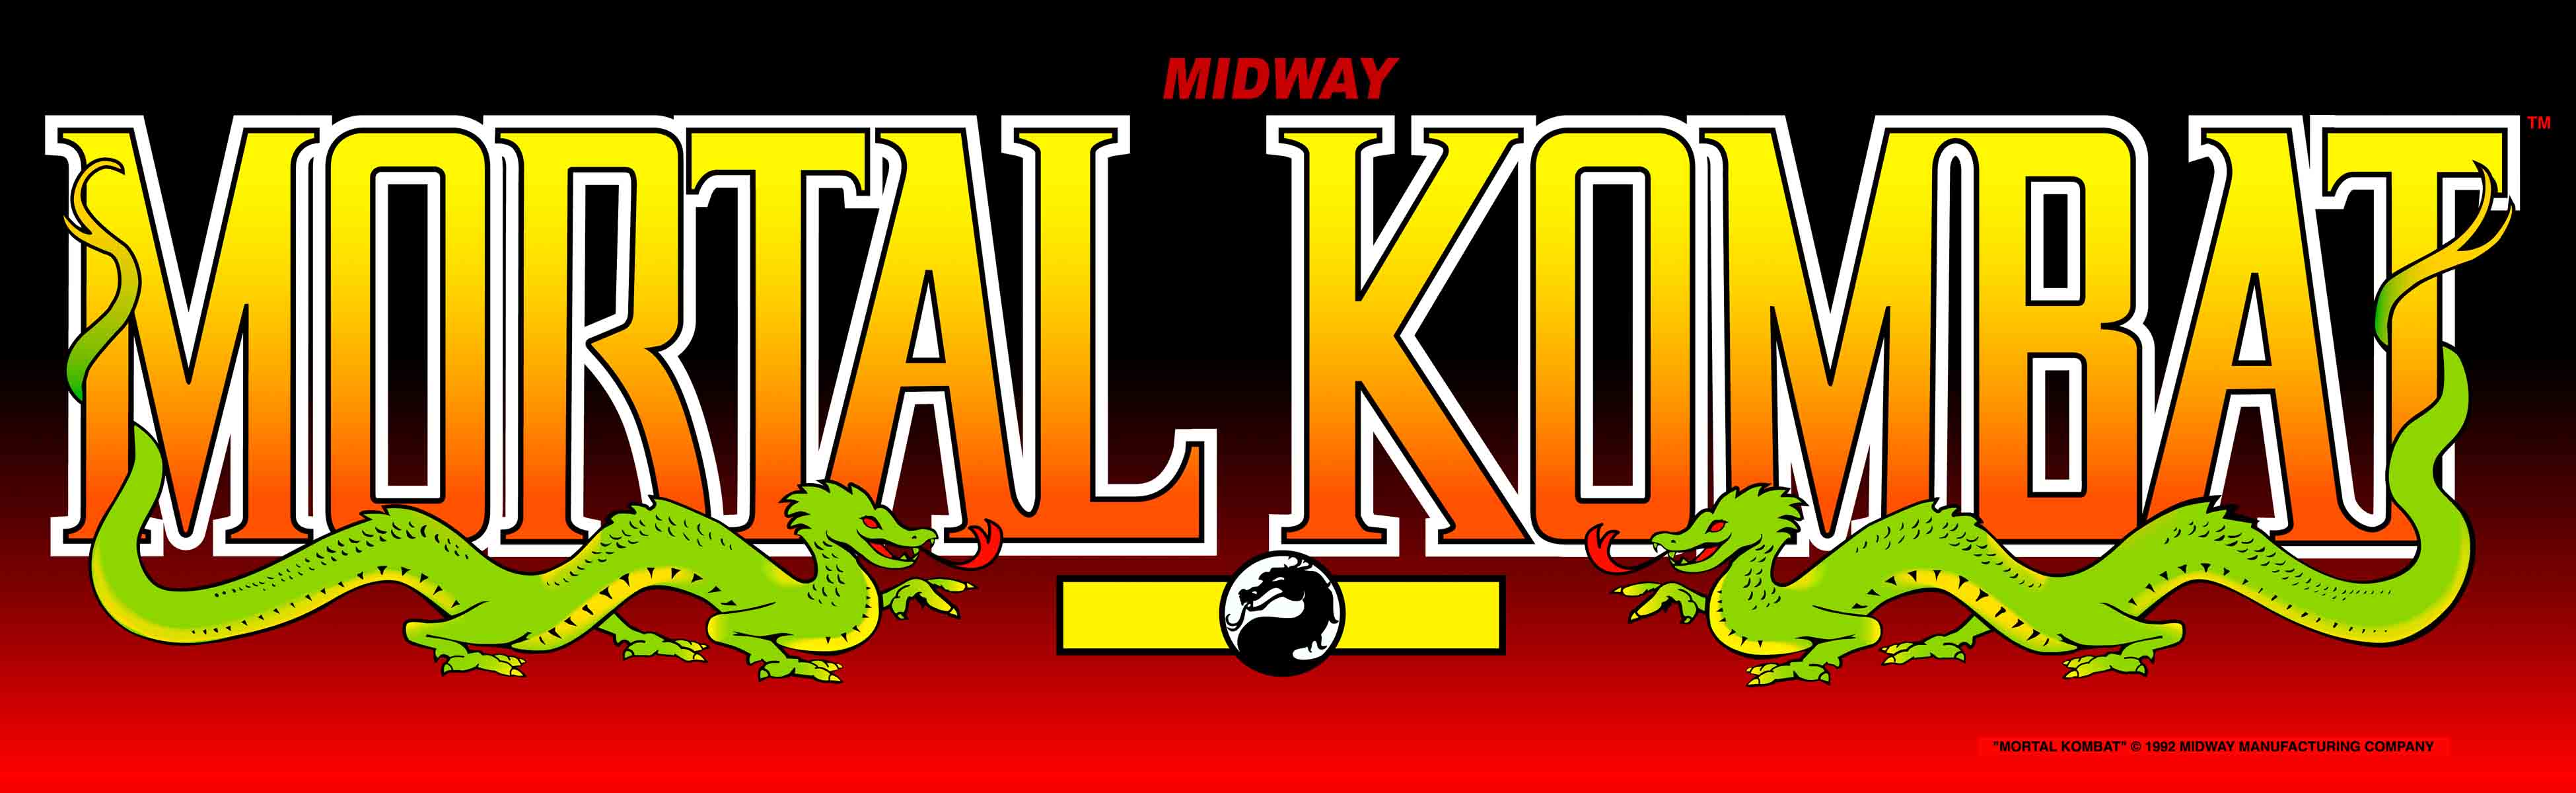 download mortal kombat arcade edition